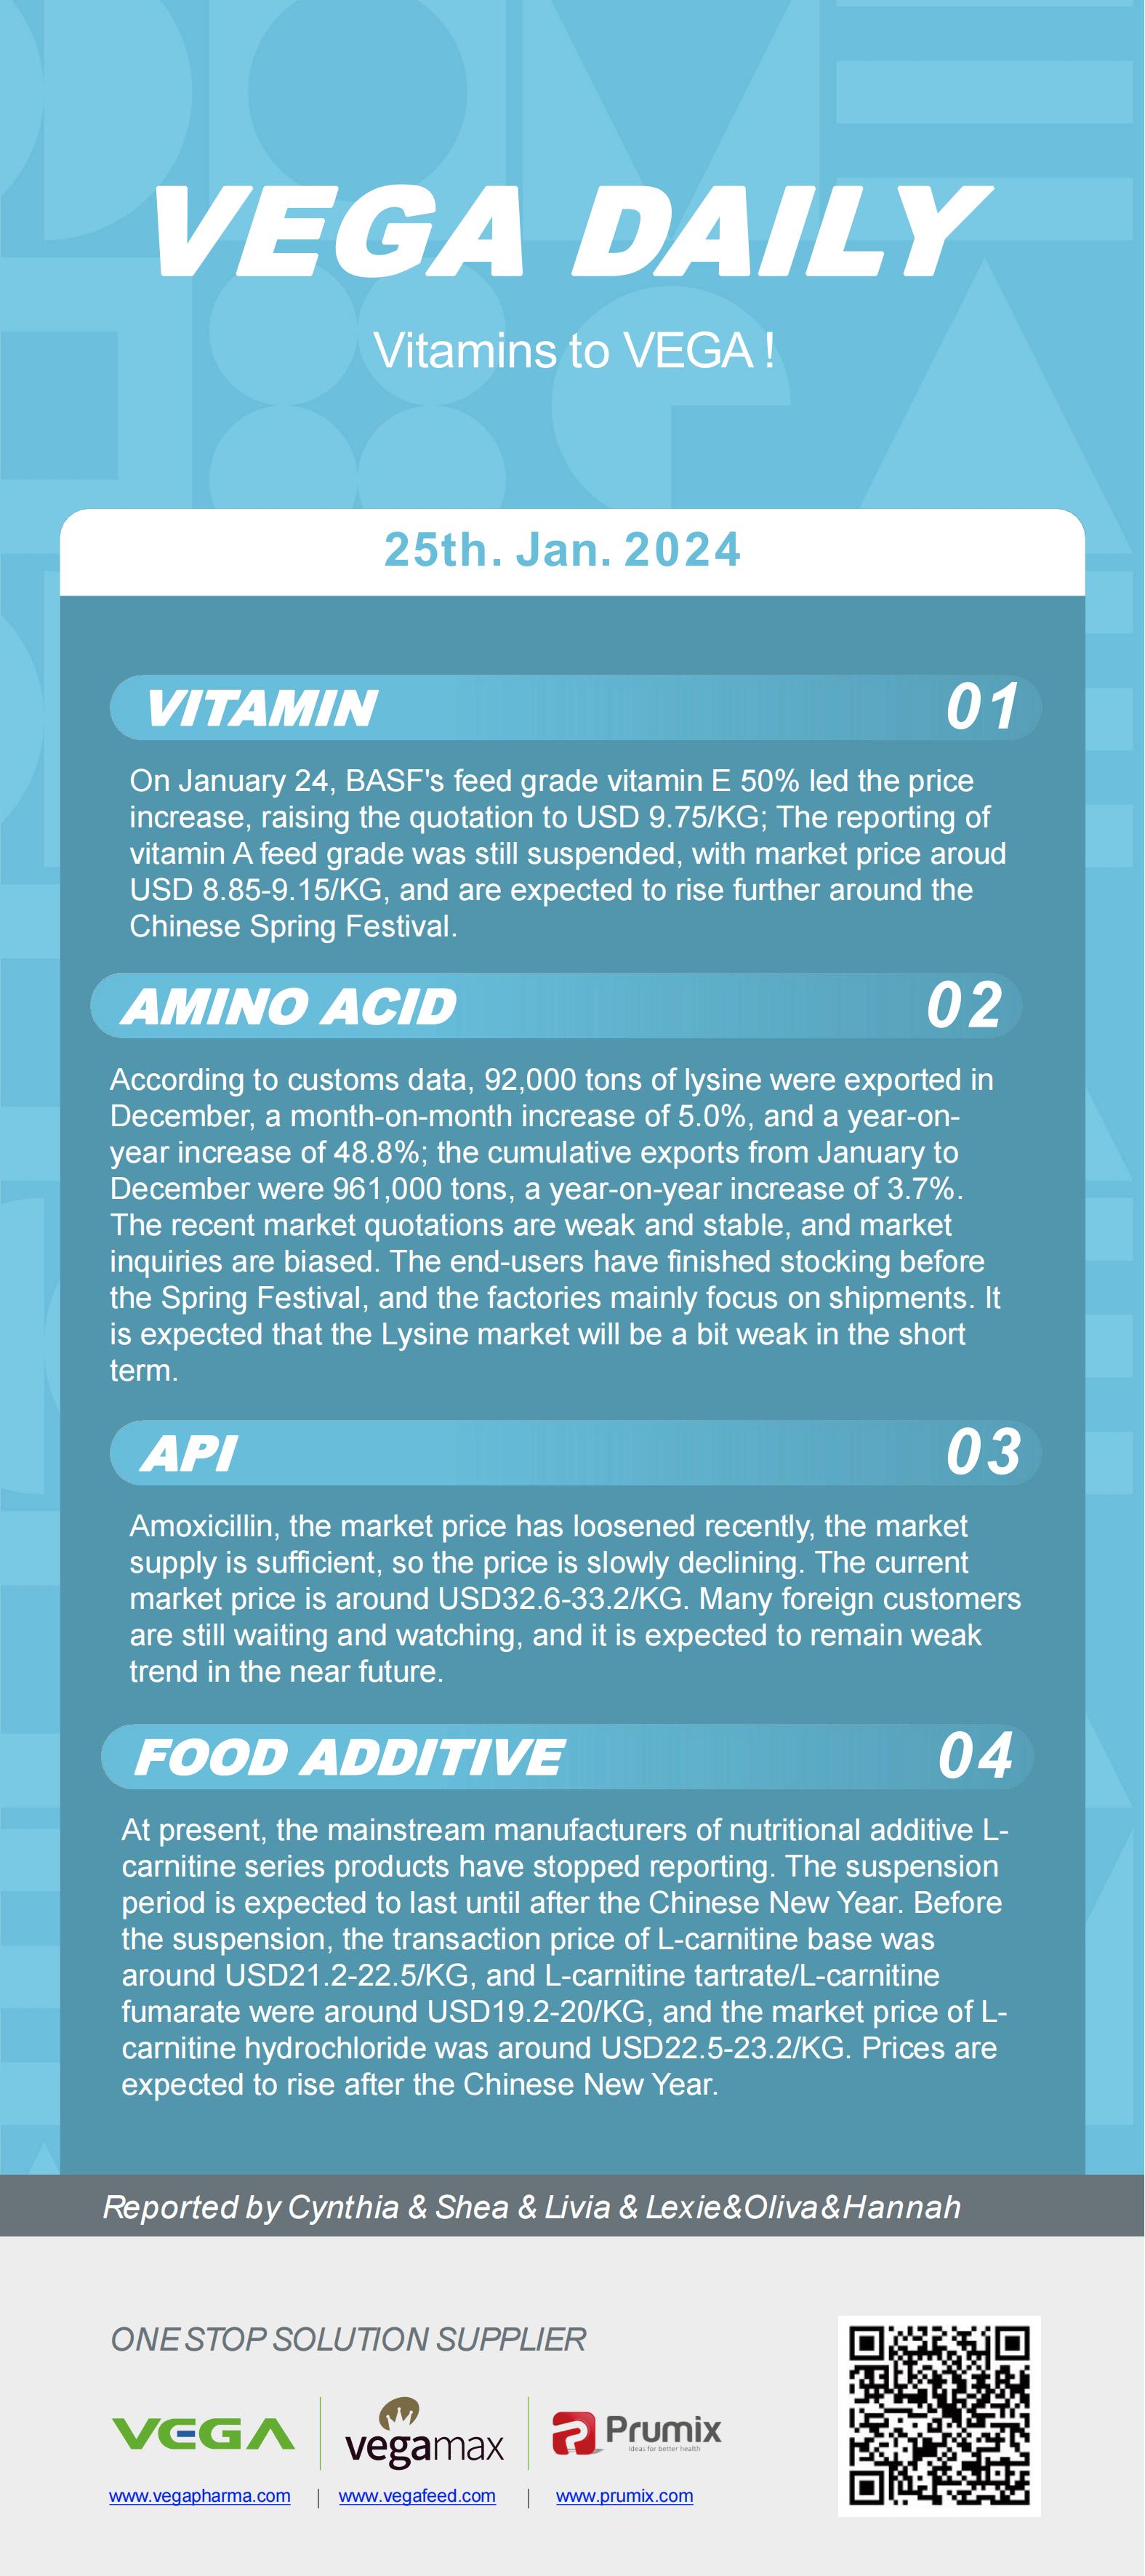 Vega Daily Dated on Jan 25th 2024 Vitamin Amino Acid APl Food Additives.jpg